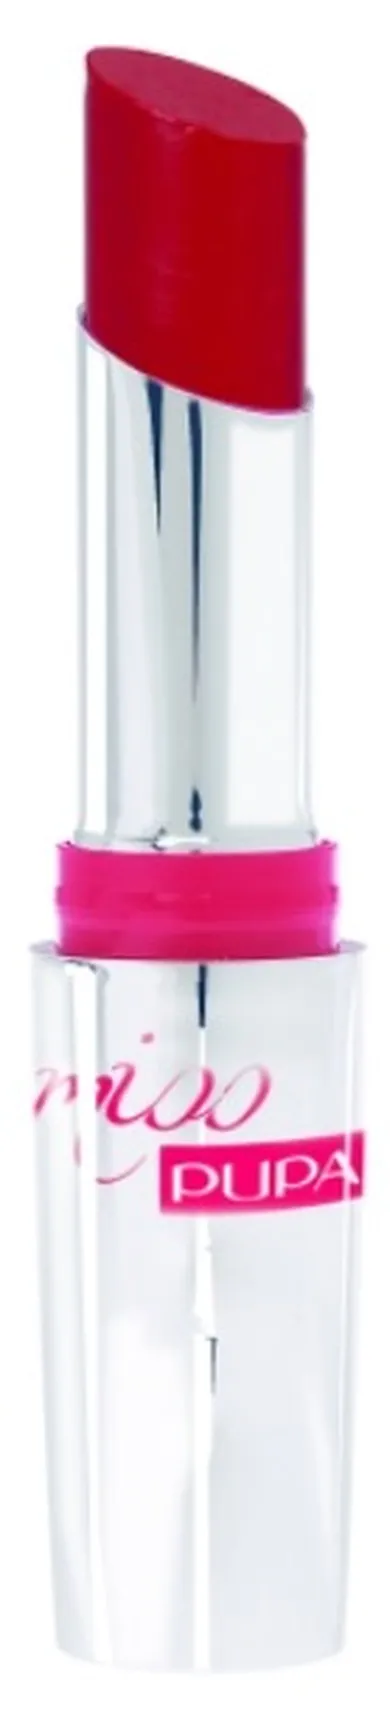 Pupa, Miss Pupa Ultra Brilliant Lipstick, pomadka do ust 504, 2,4 ml